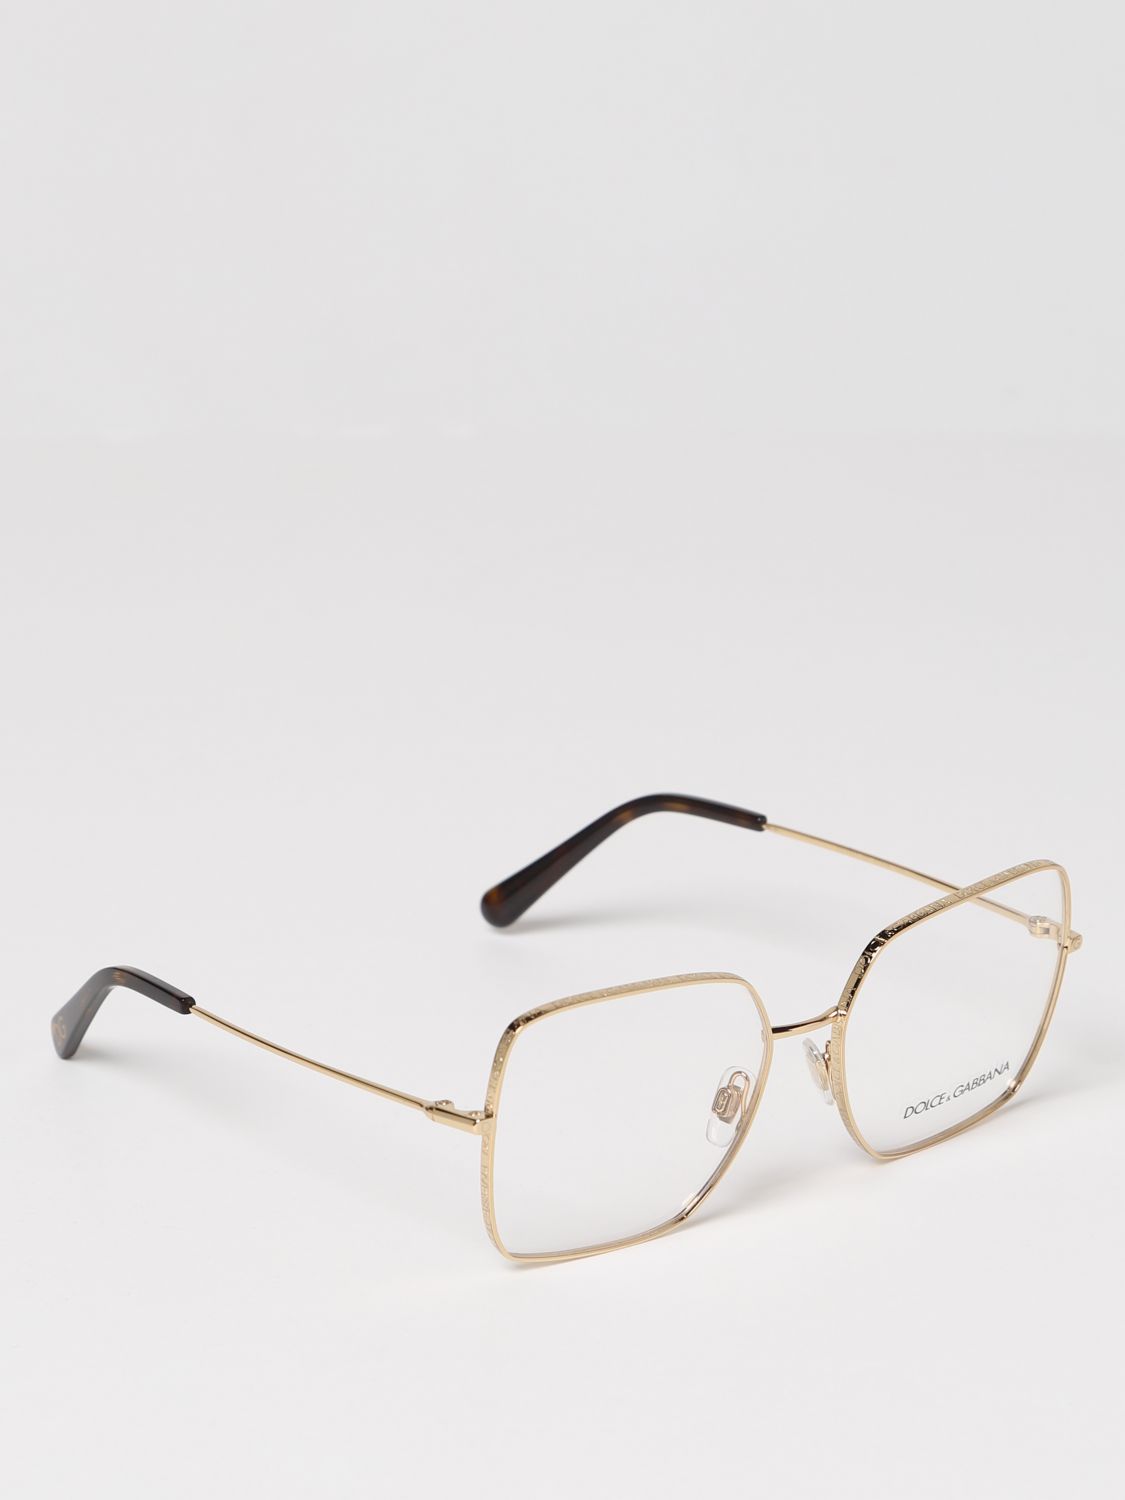 DOLCE & GABBANA: metal eyeglasses - Gold | Dolce & Gabbana optical frames  DG 1323 online on 